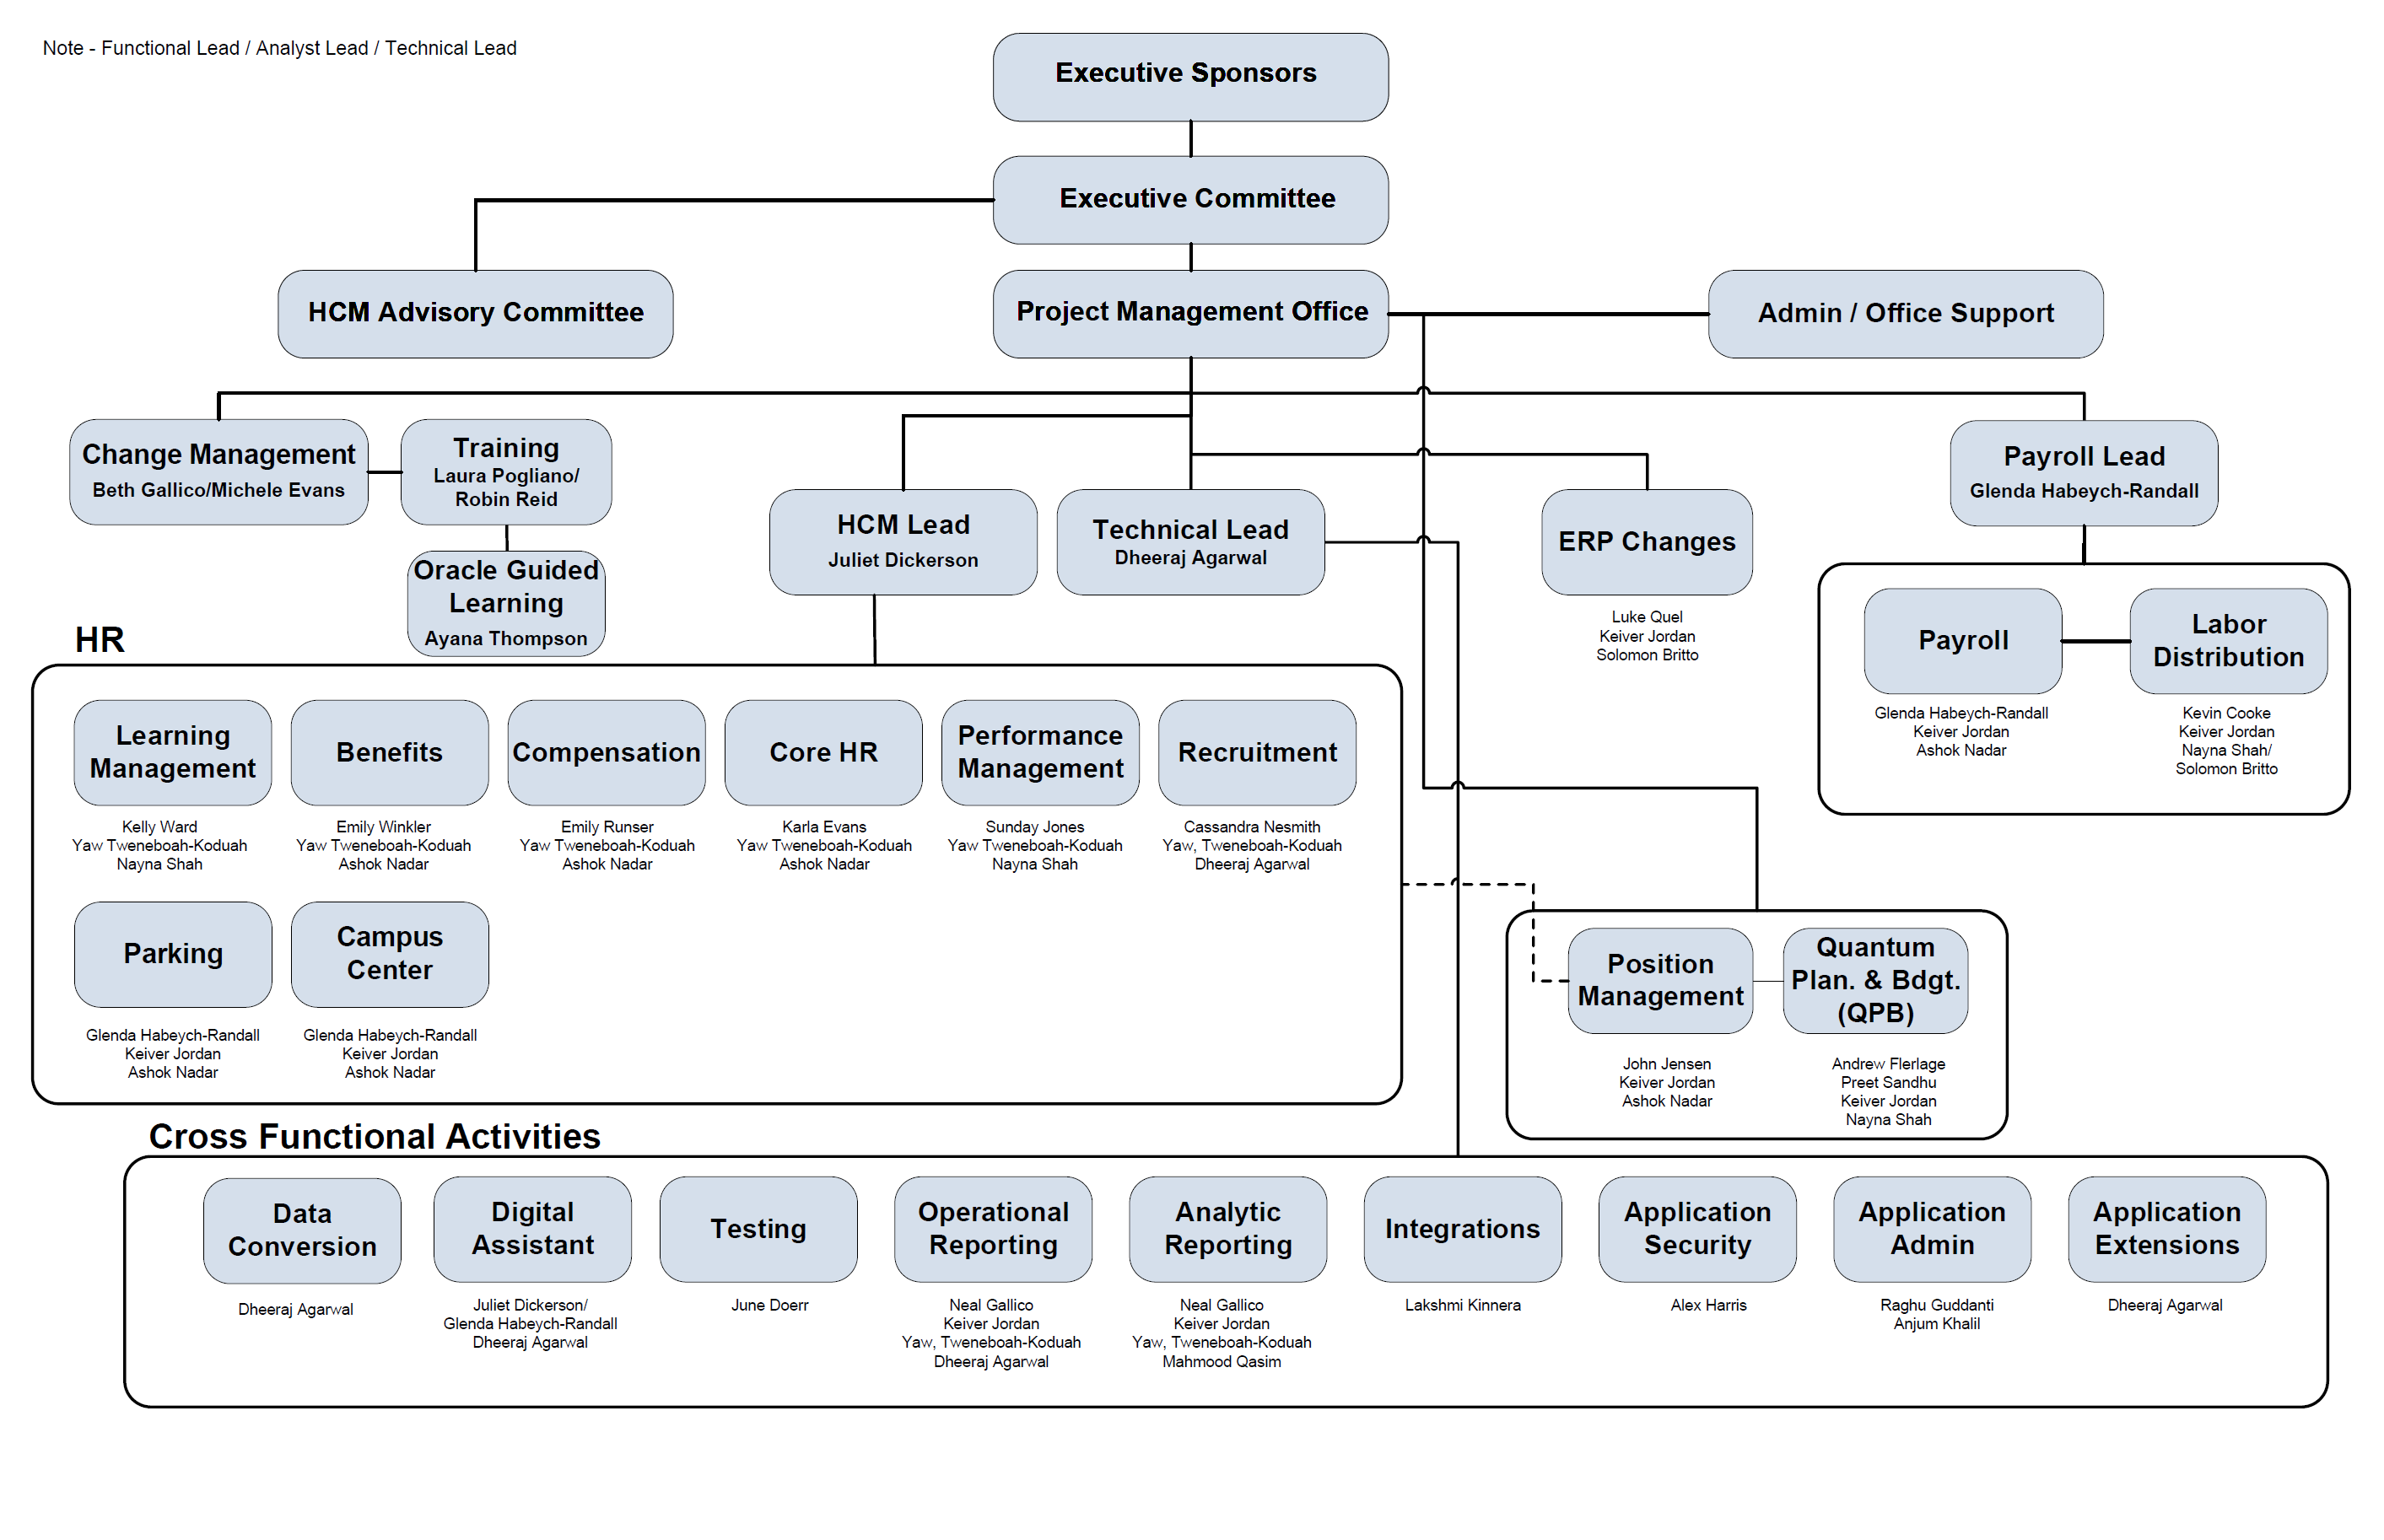 QHCM Organizational Chart